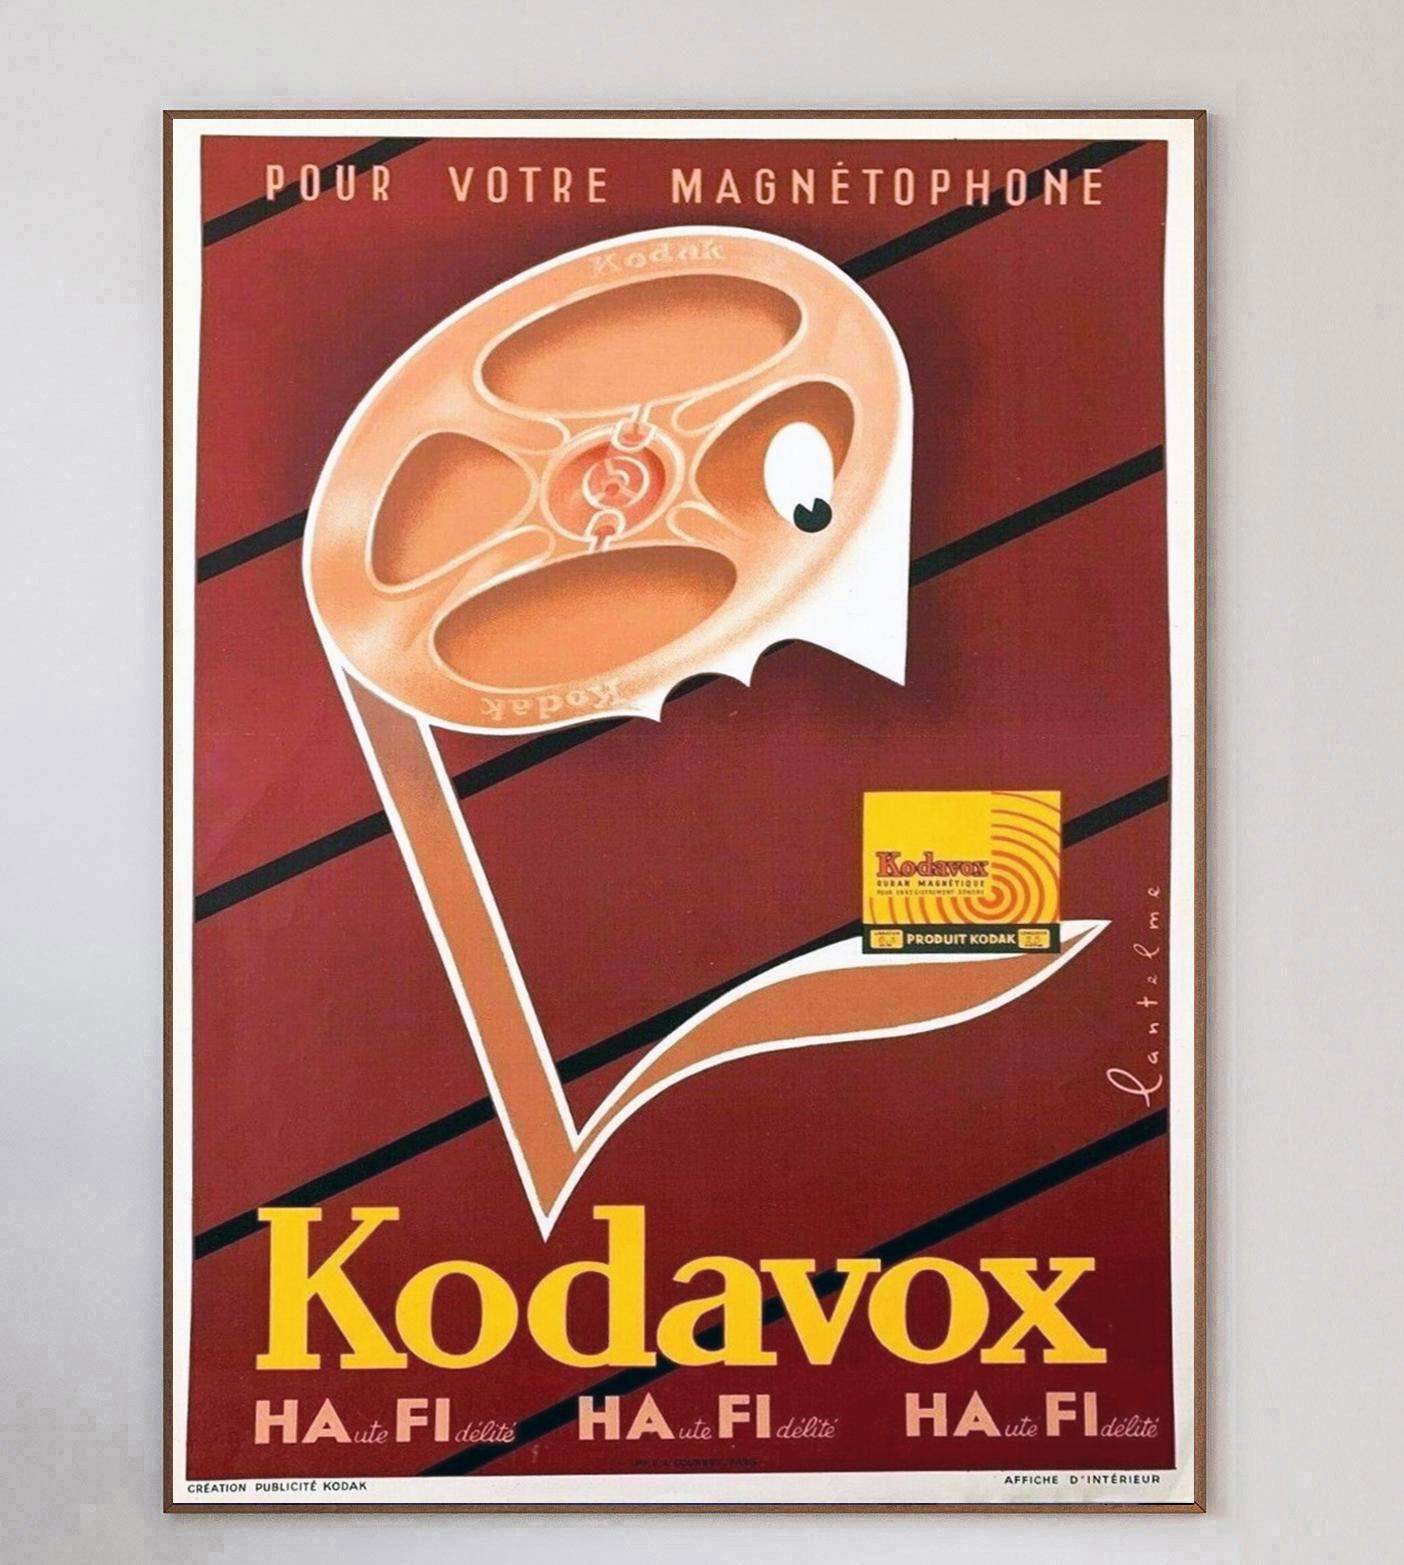 Gorgeous design for Kodak Kodavox tape produced in 1955 with wonderful mid century artwork by Lantelme. Reading 